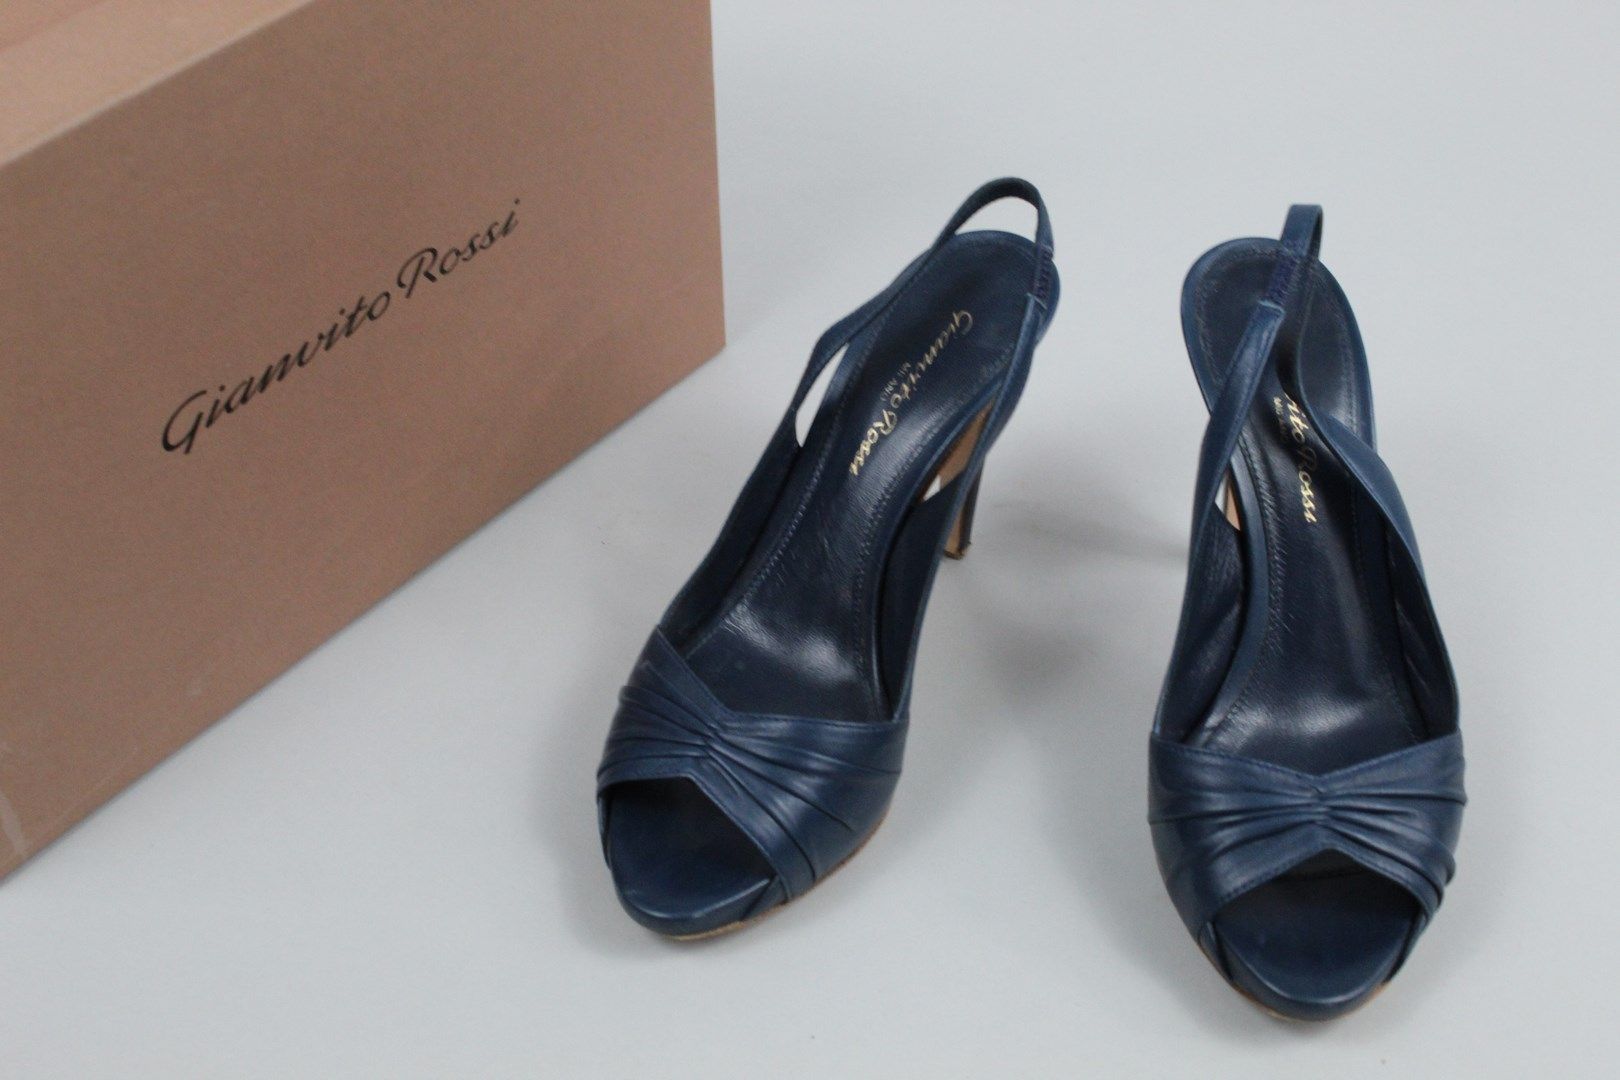 Null 吉安维托-罗西



一双光滑的蓝色皮革凉鞋，深蓝色漆皮鞋跟。

前面是褶皱的皮革。



尺寸：36



鞋跟高度：10厘米



带盒